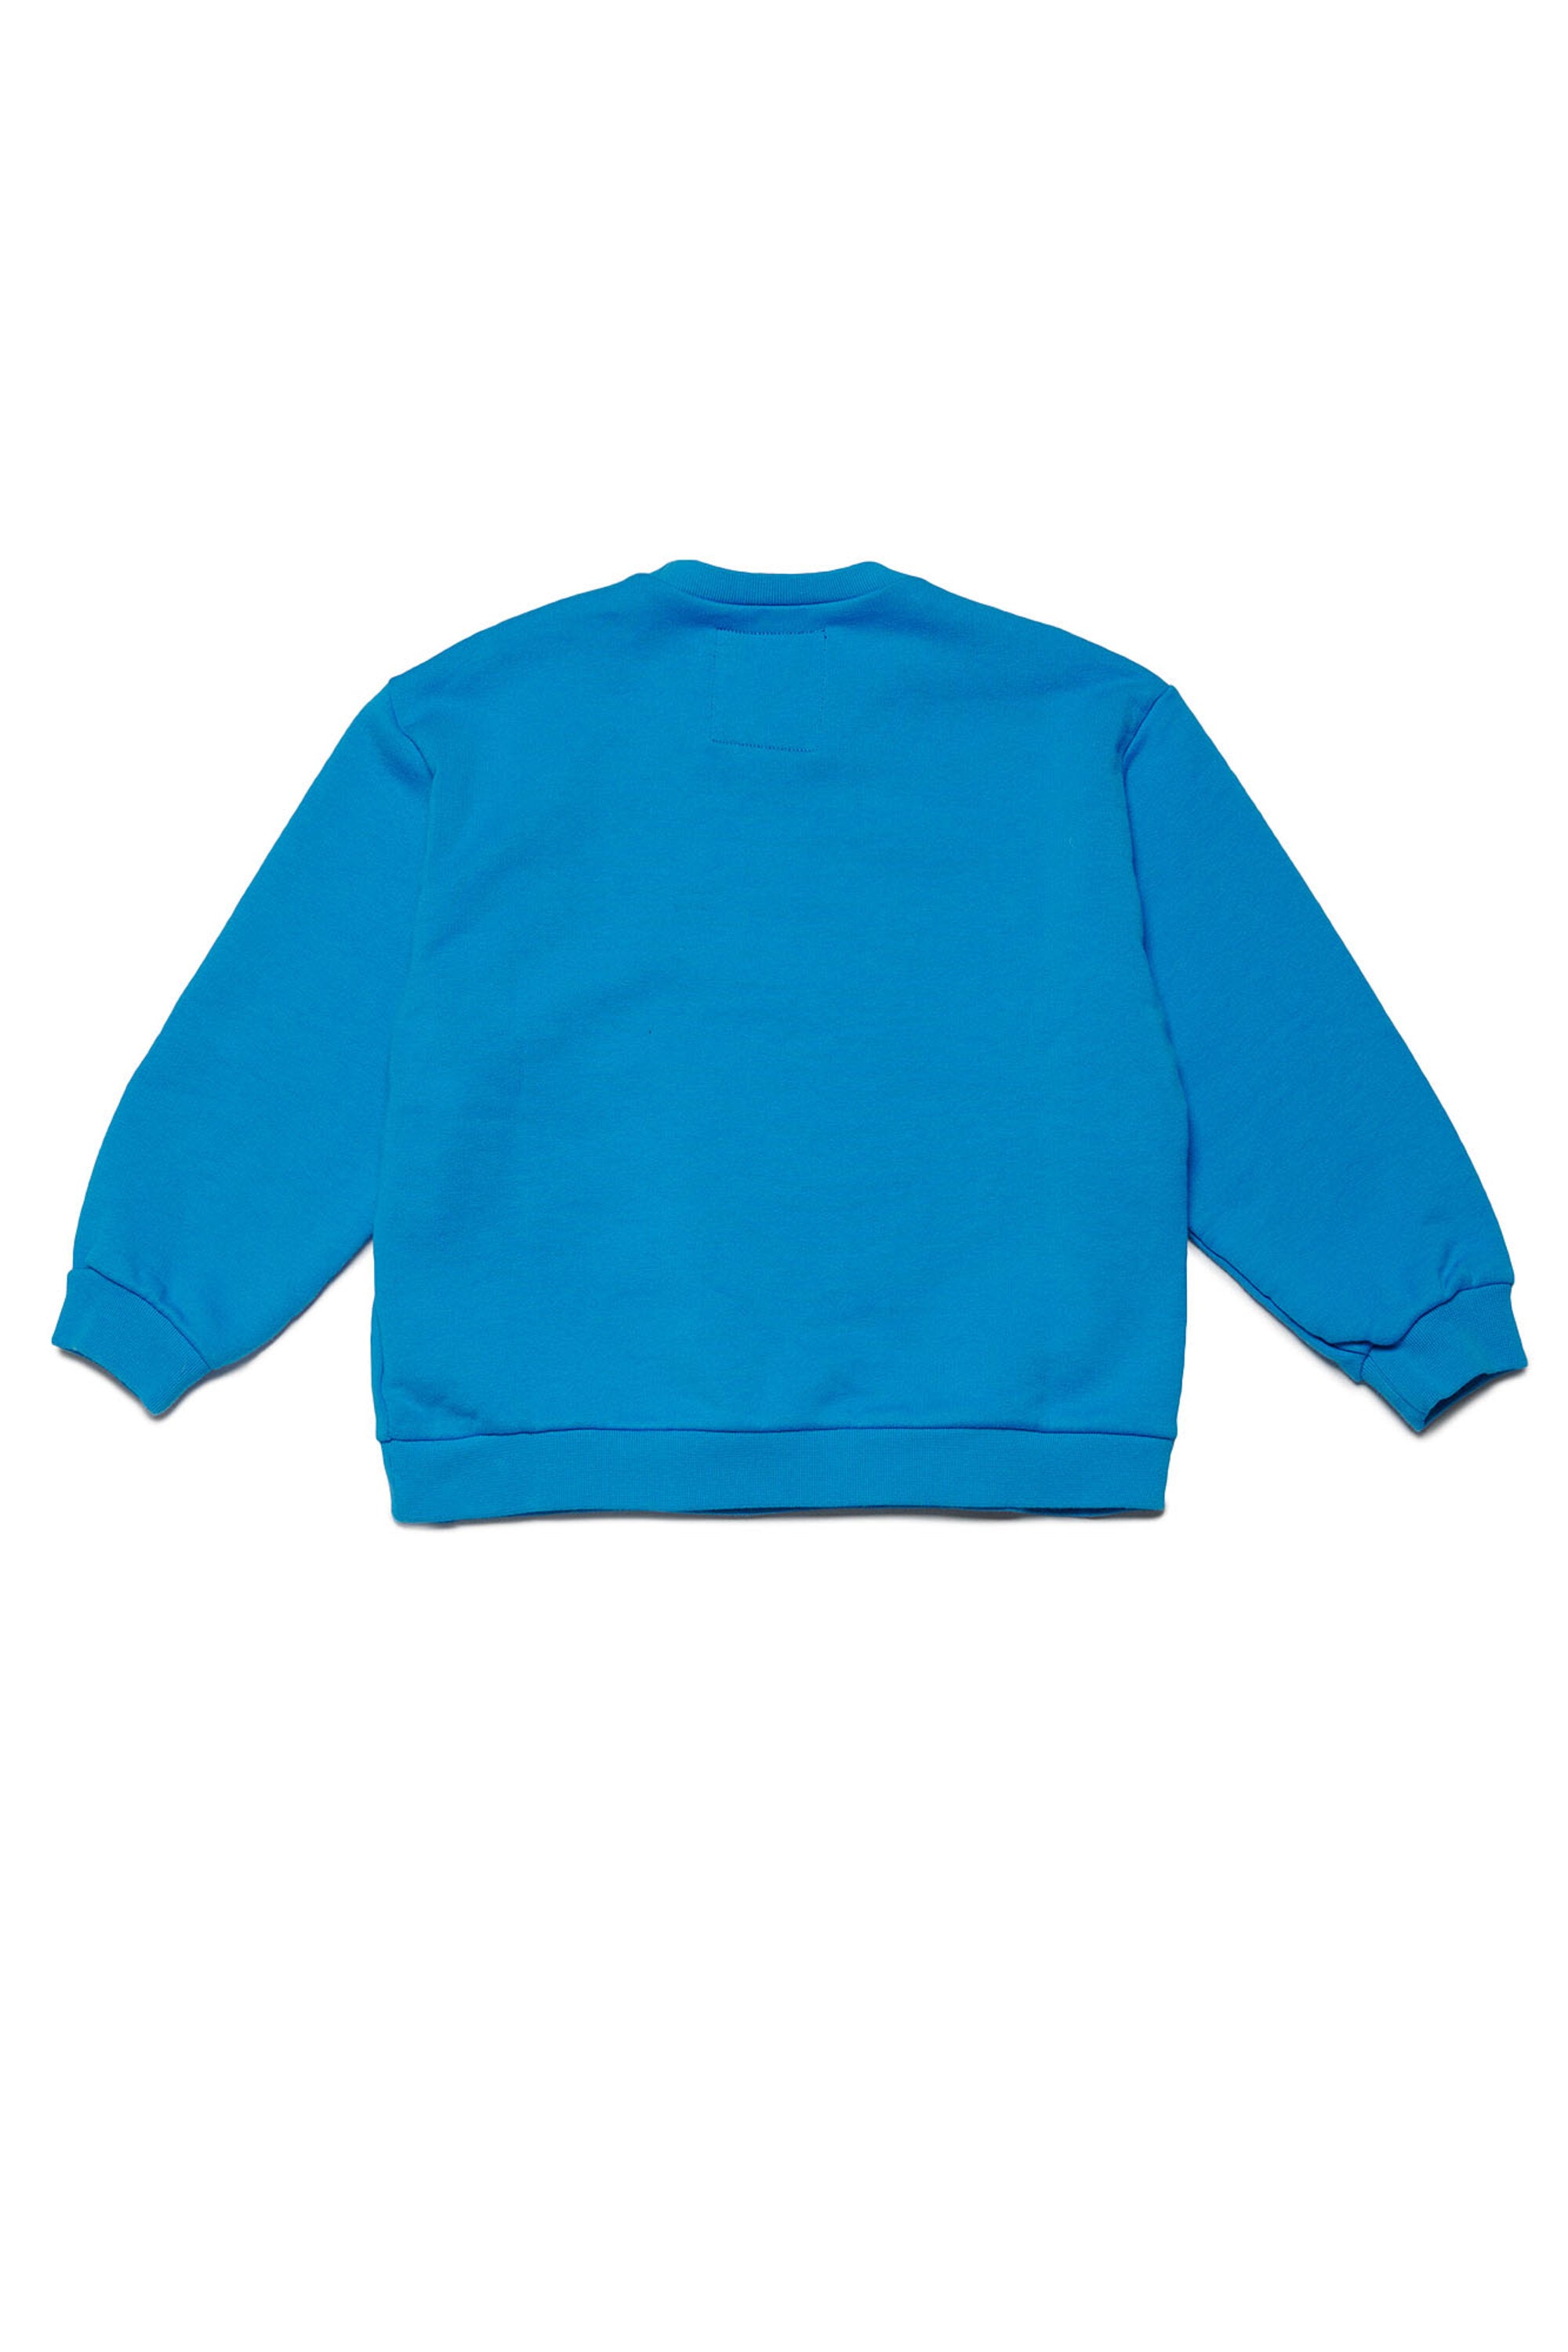 Deadstock fabric sweatshirt with MYAR logo